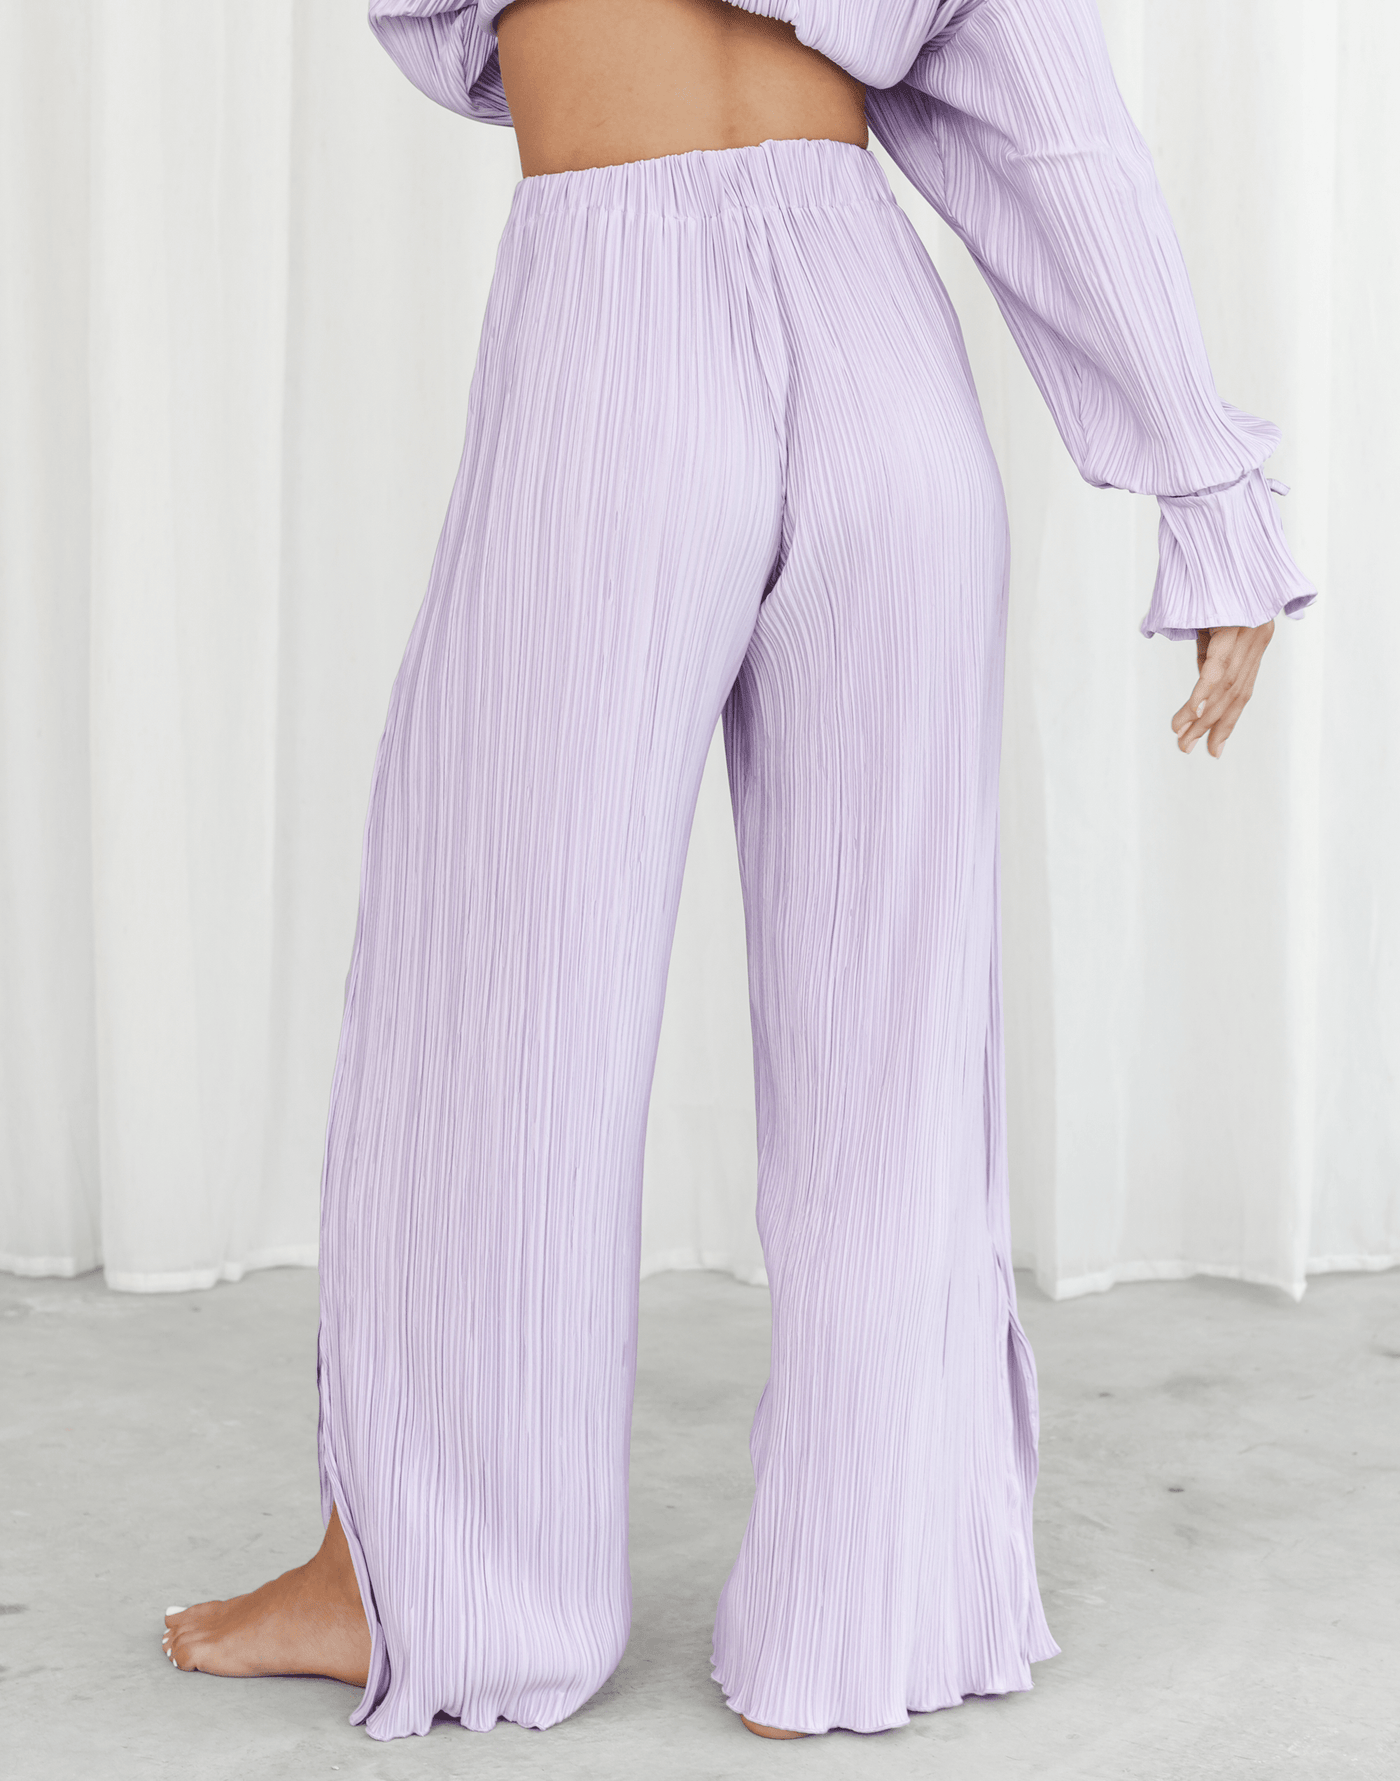 Sweet Serenity Pants (Lilac) - Purple Pleated Pants - Women's Pants - Charcoal Clothing